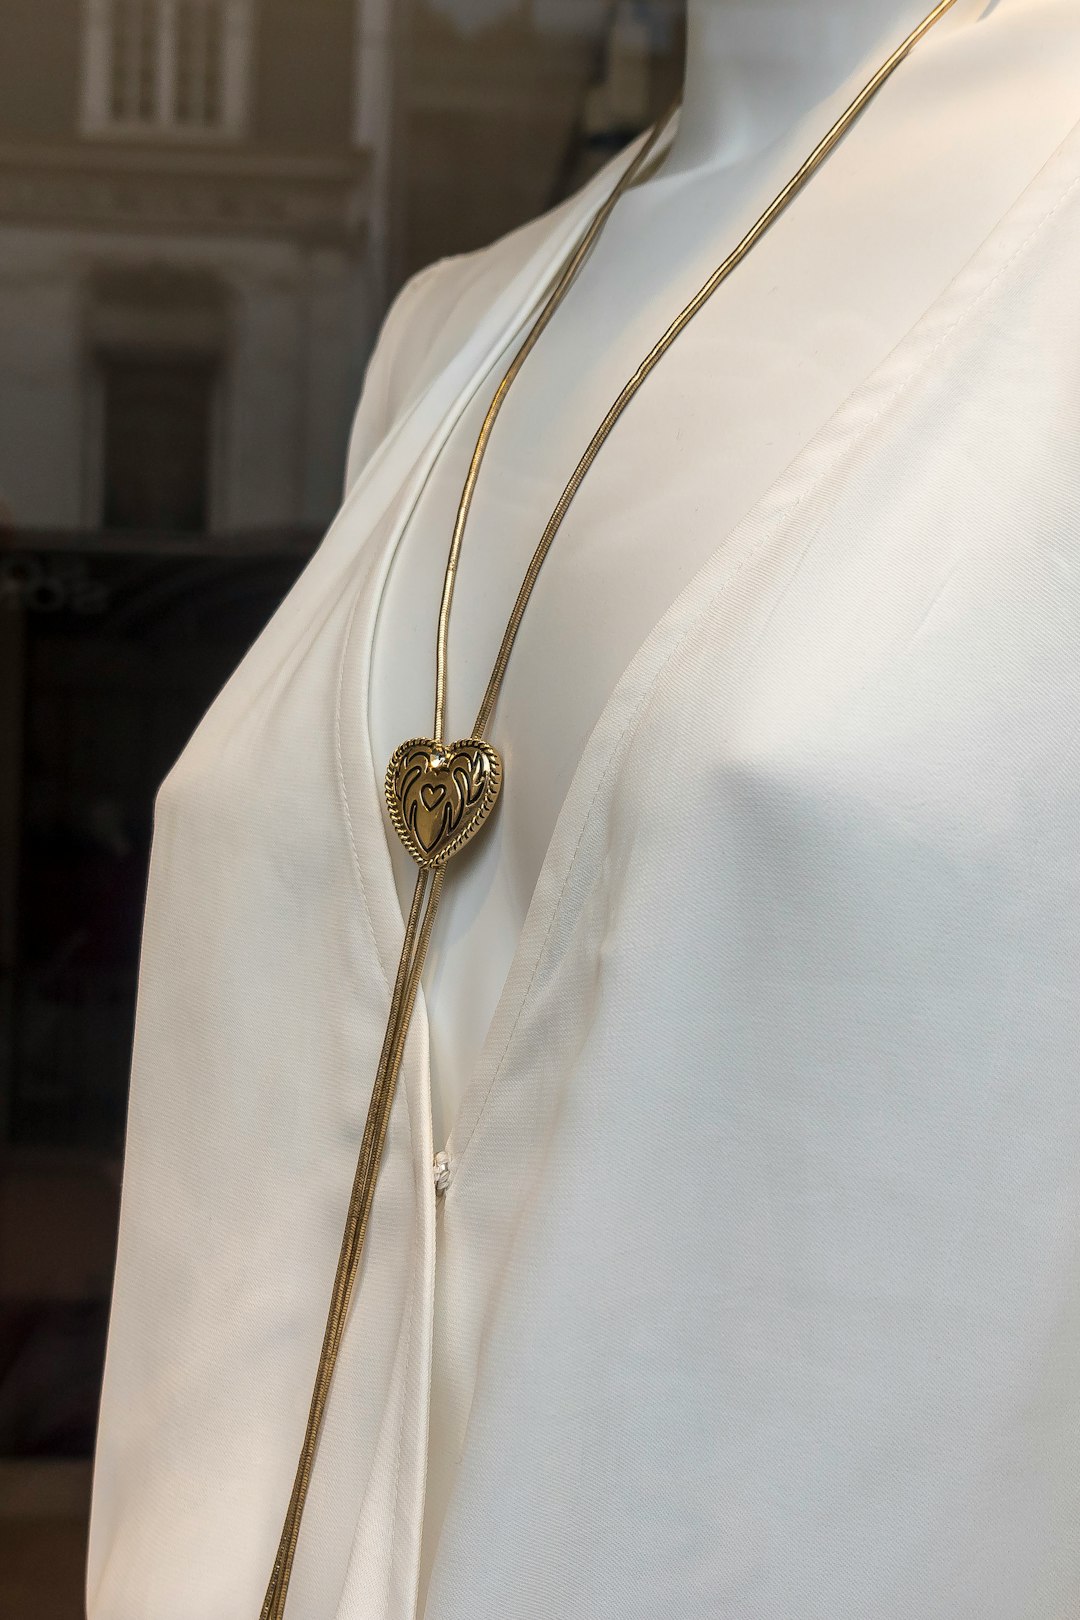 gold round pendant necklace on white textile